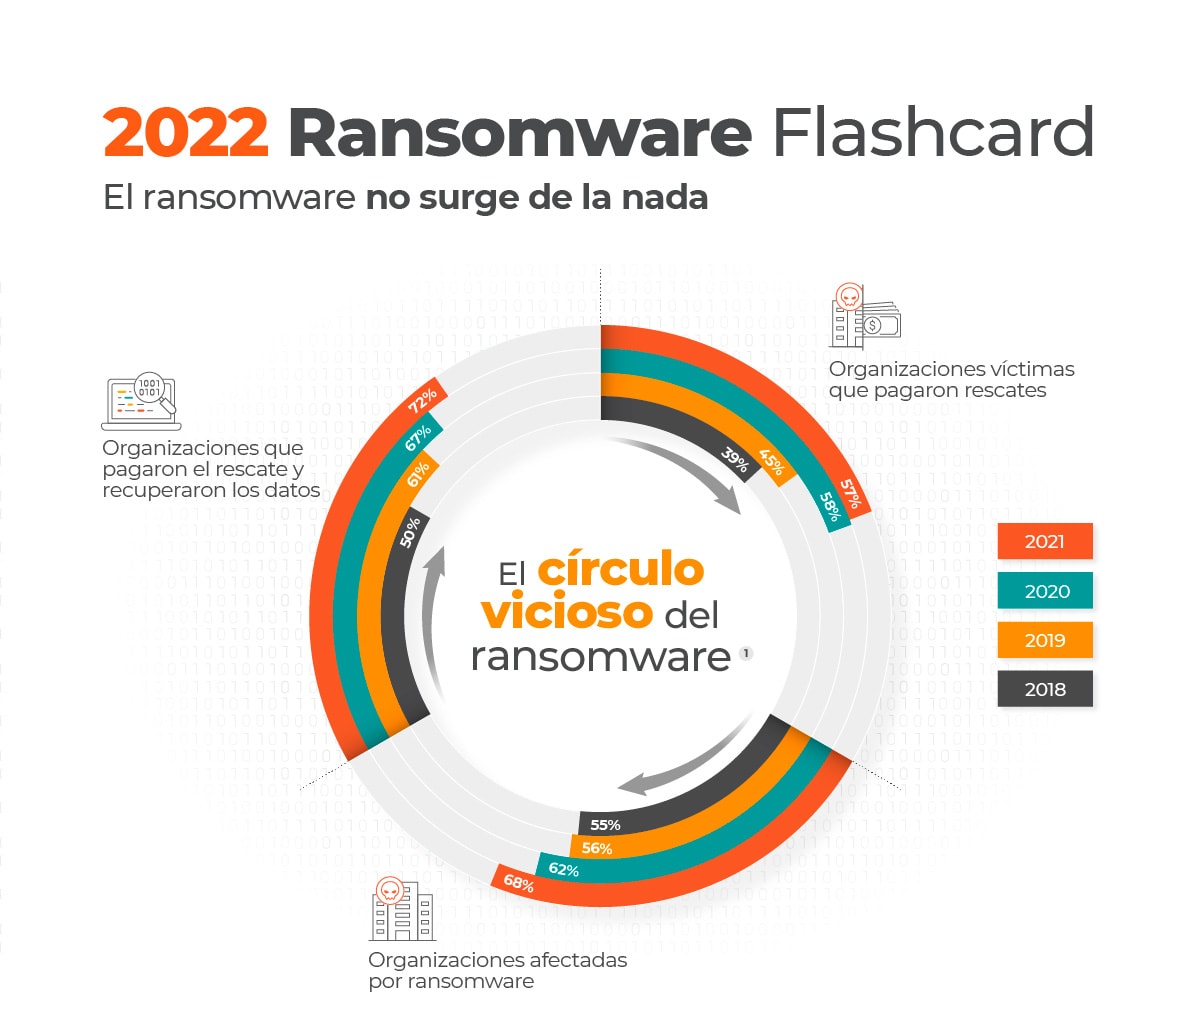 2022 Ransomware Flashcard